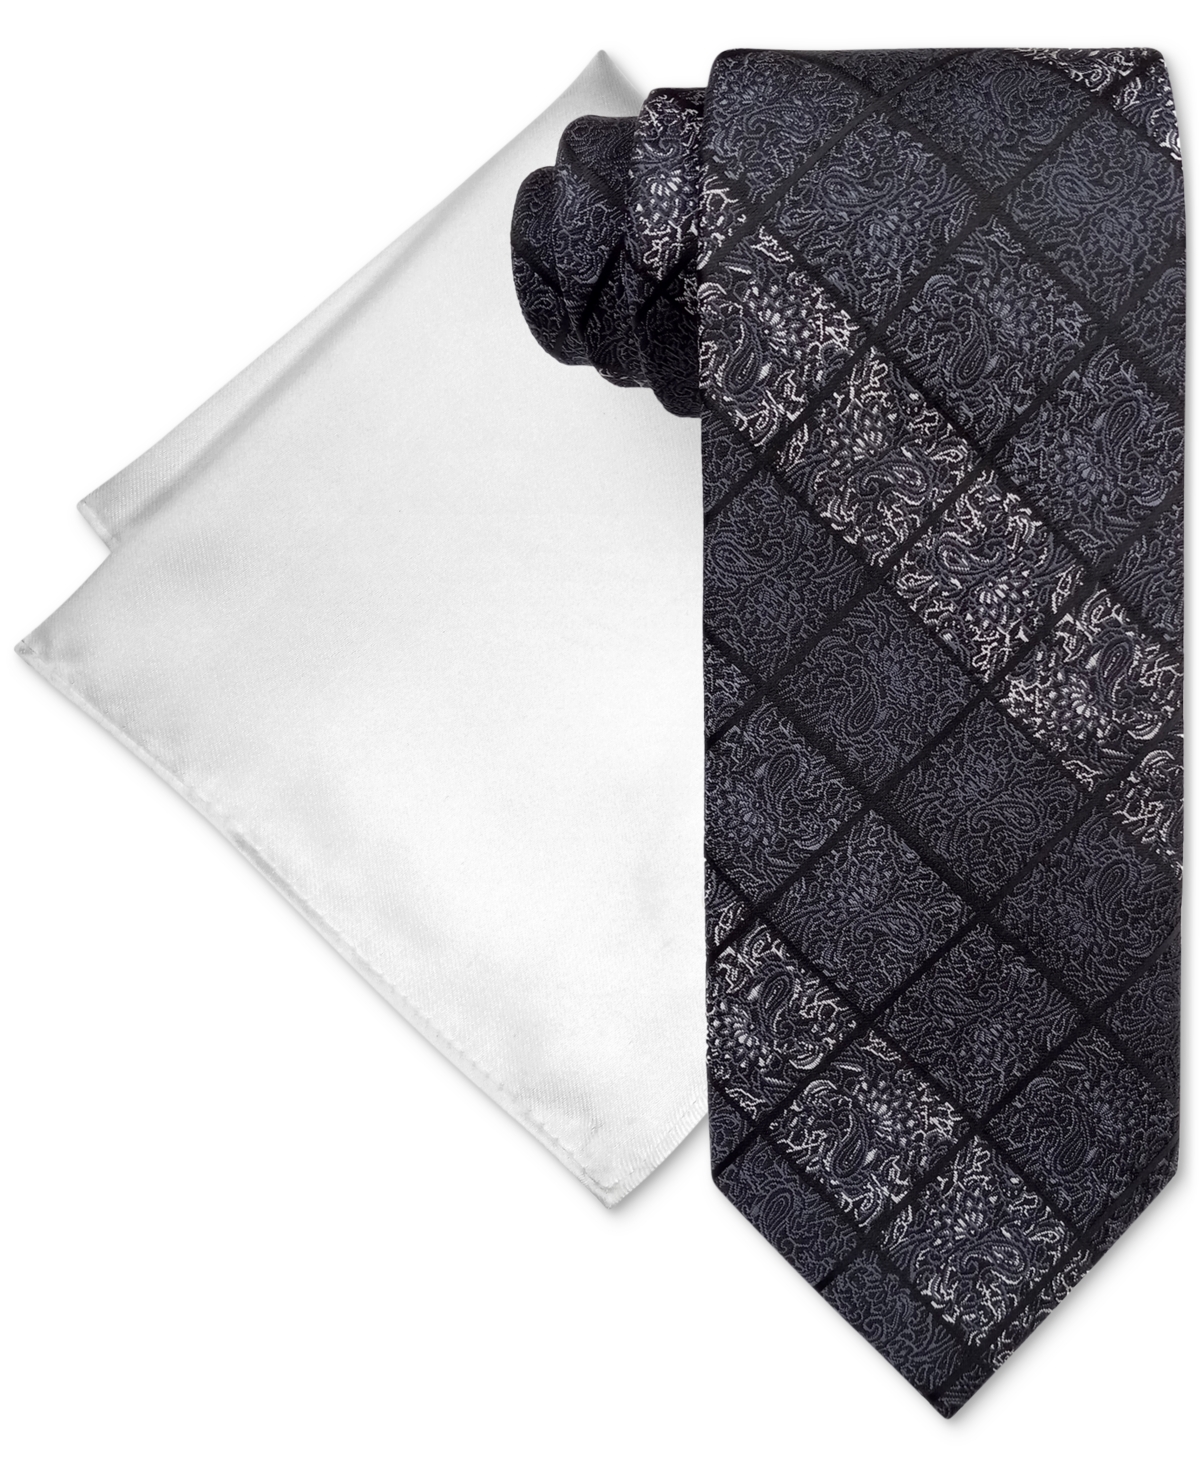 Men's Paisley Square Tie & Pocket Square Set - Taupe